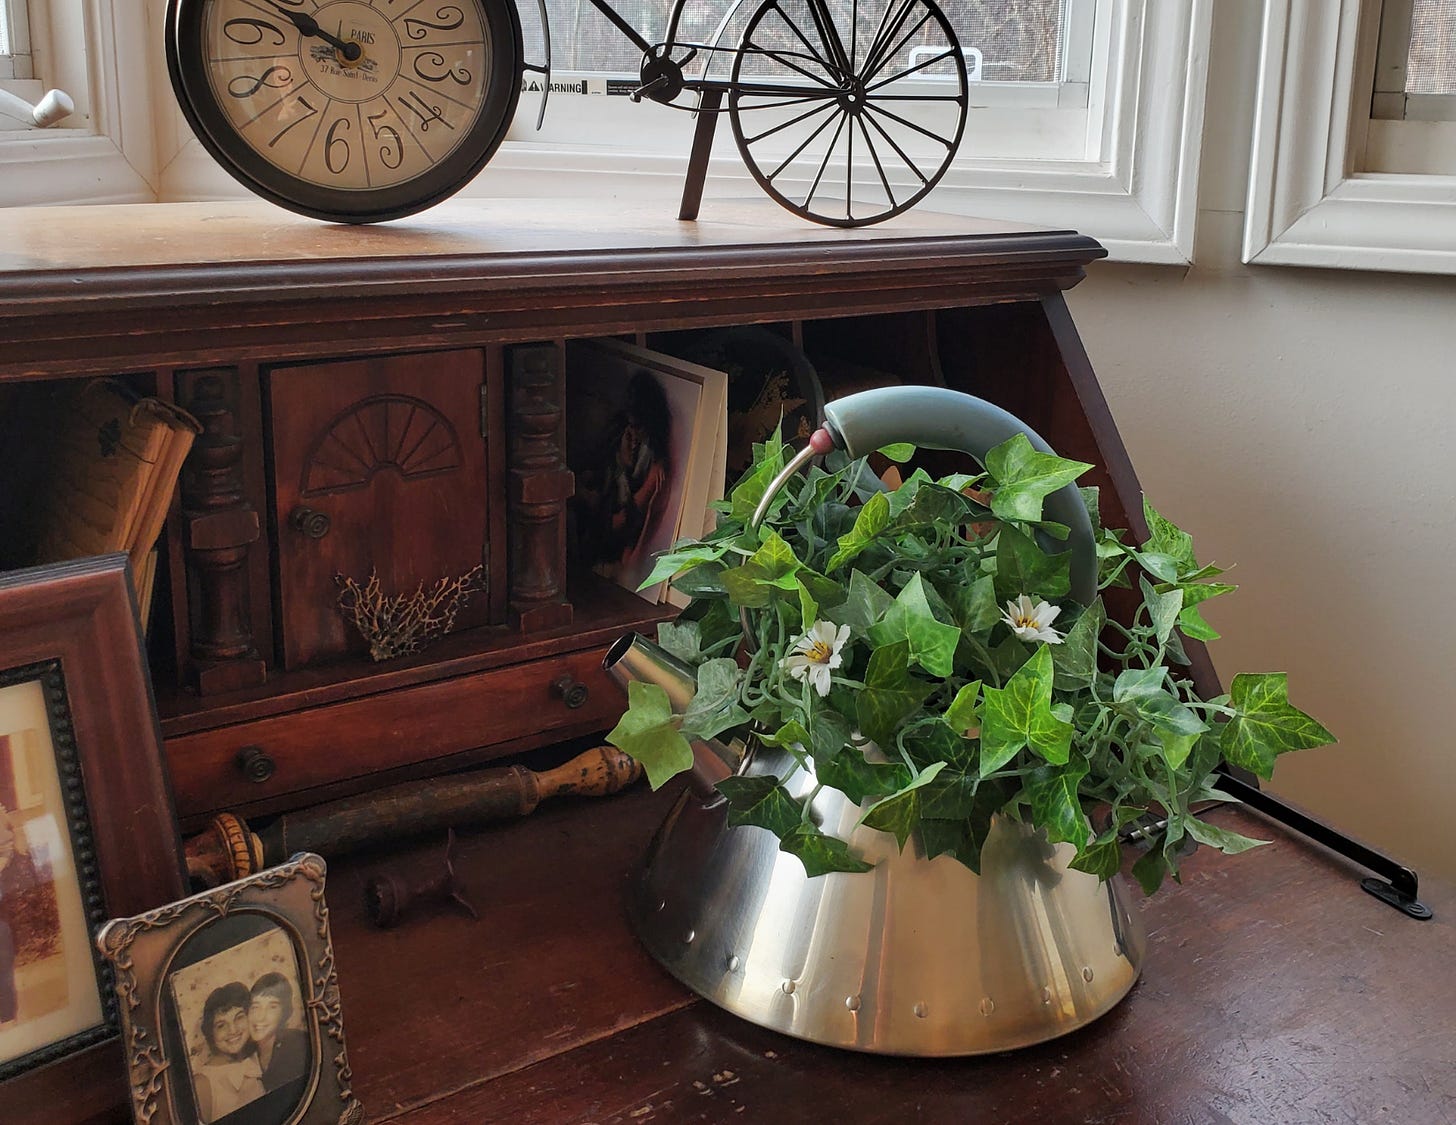 A burned tea kettle repurposed as a flower pot